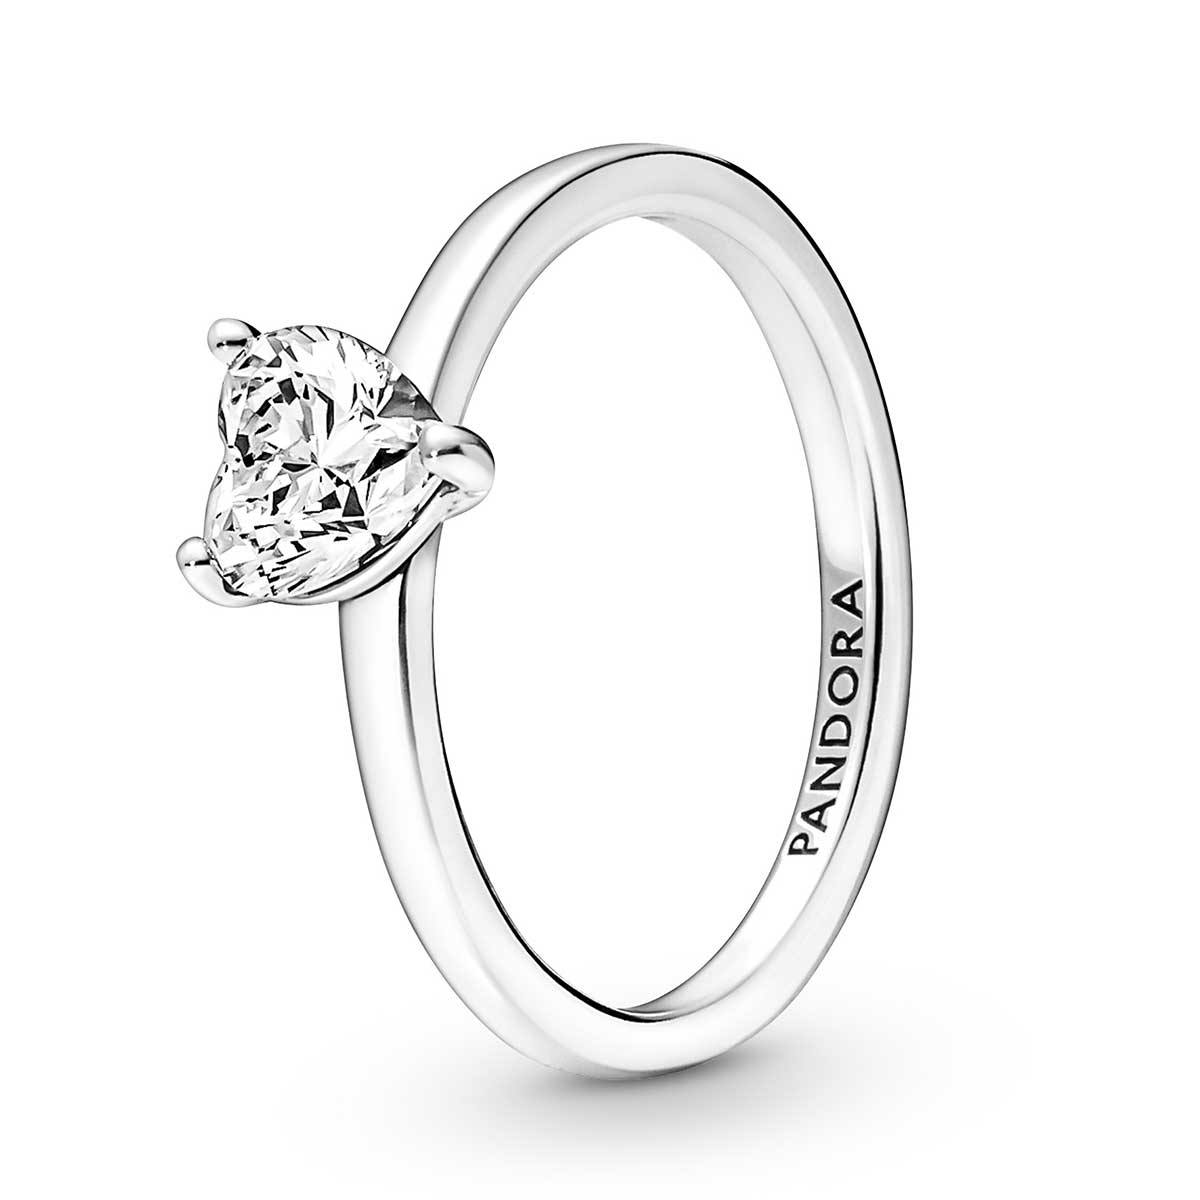 Pandora Sparkling Heart Solitaire Ring: Precious Accents, Ltd.